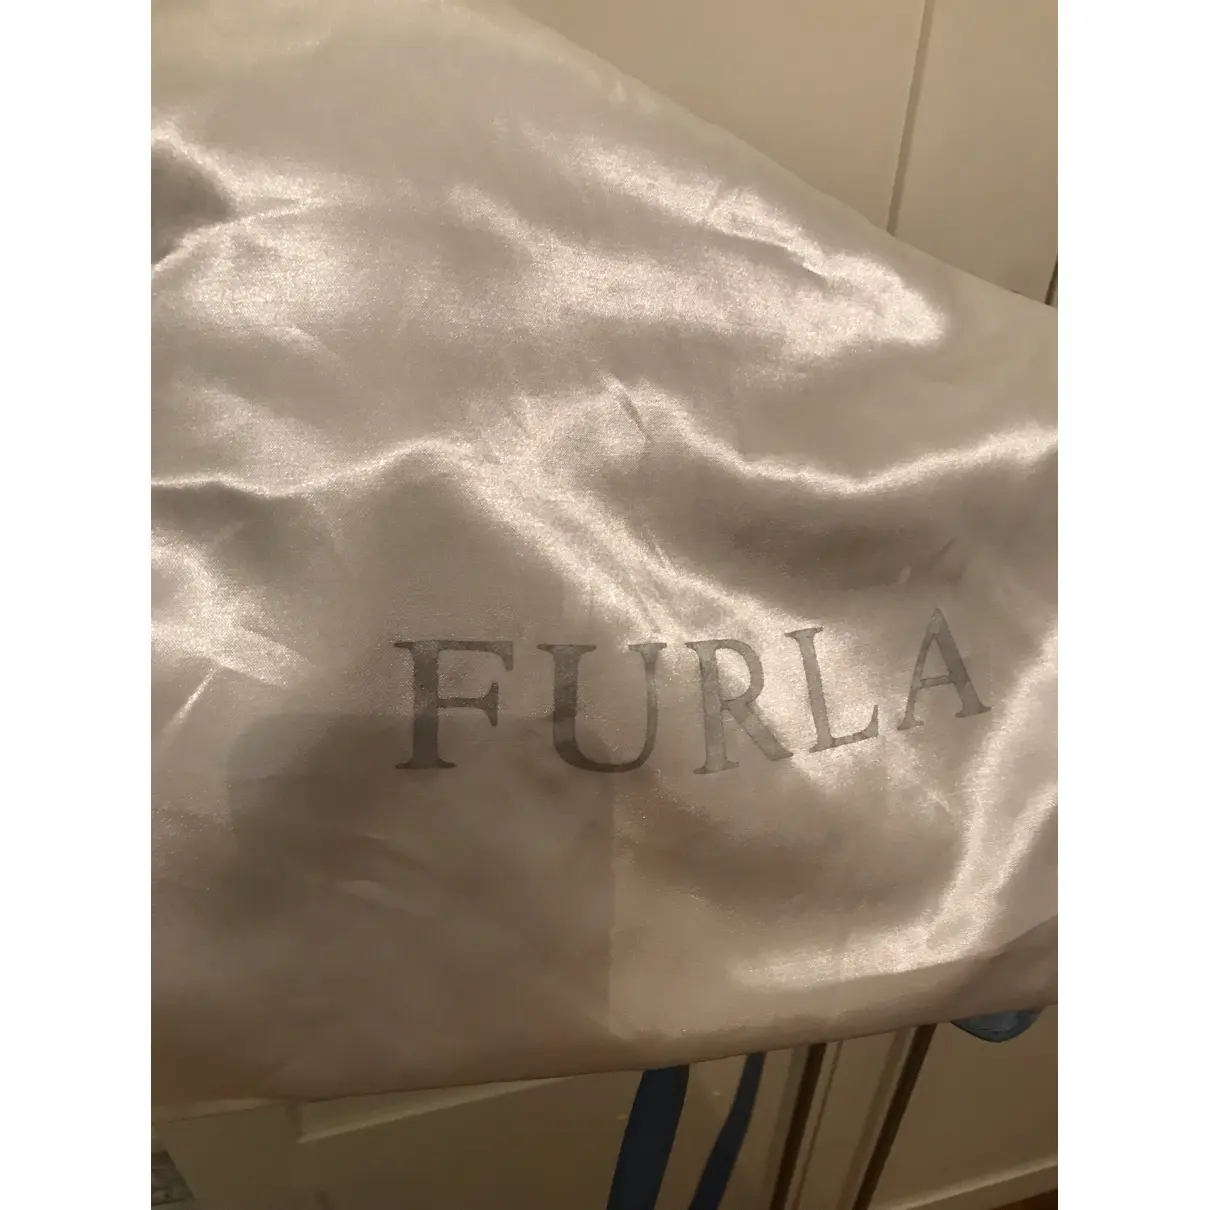 Leather crossbody bag Furla